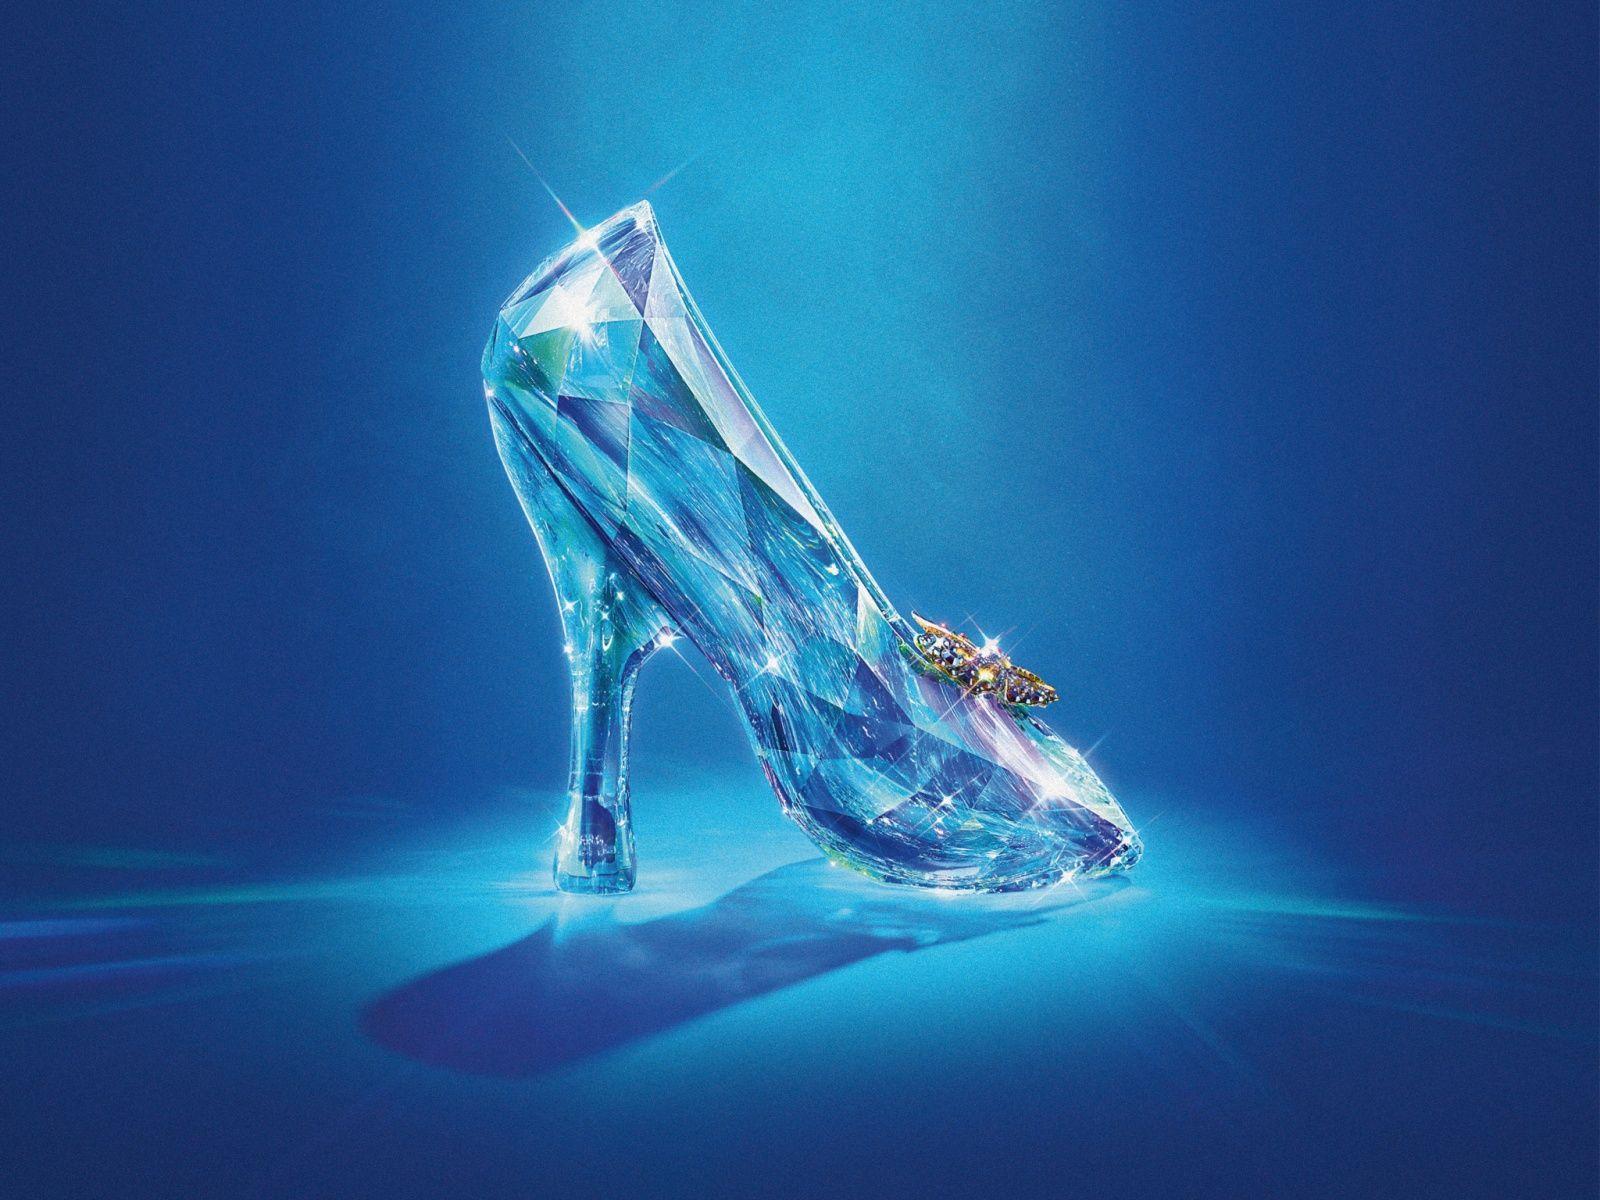 Cinderella 2015 Movie Wallpaper in jpg format for free download